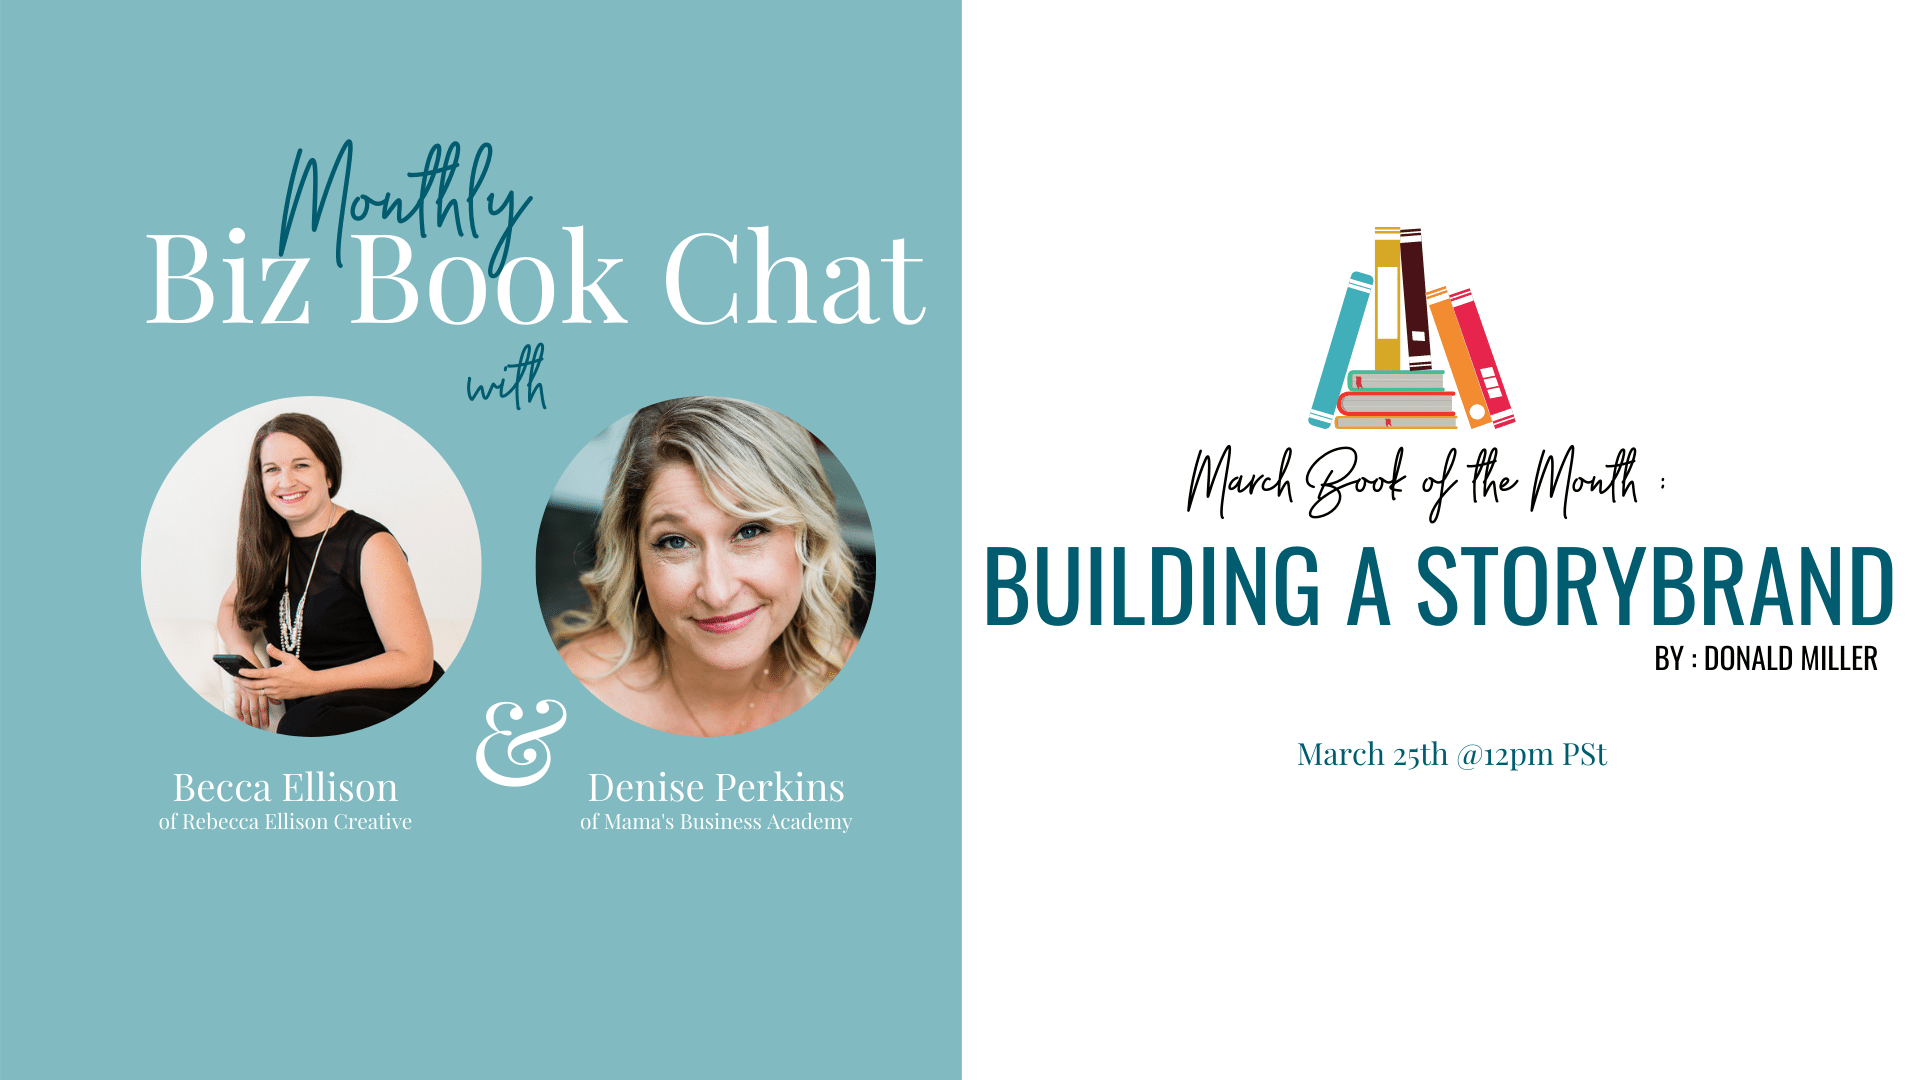 biz book chat: building a storybrand